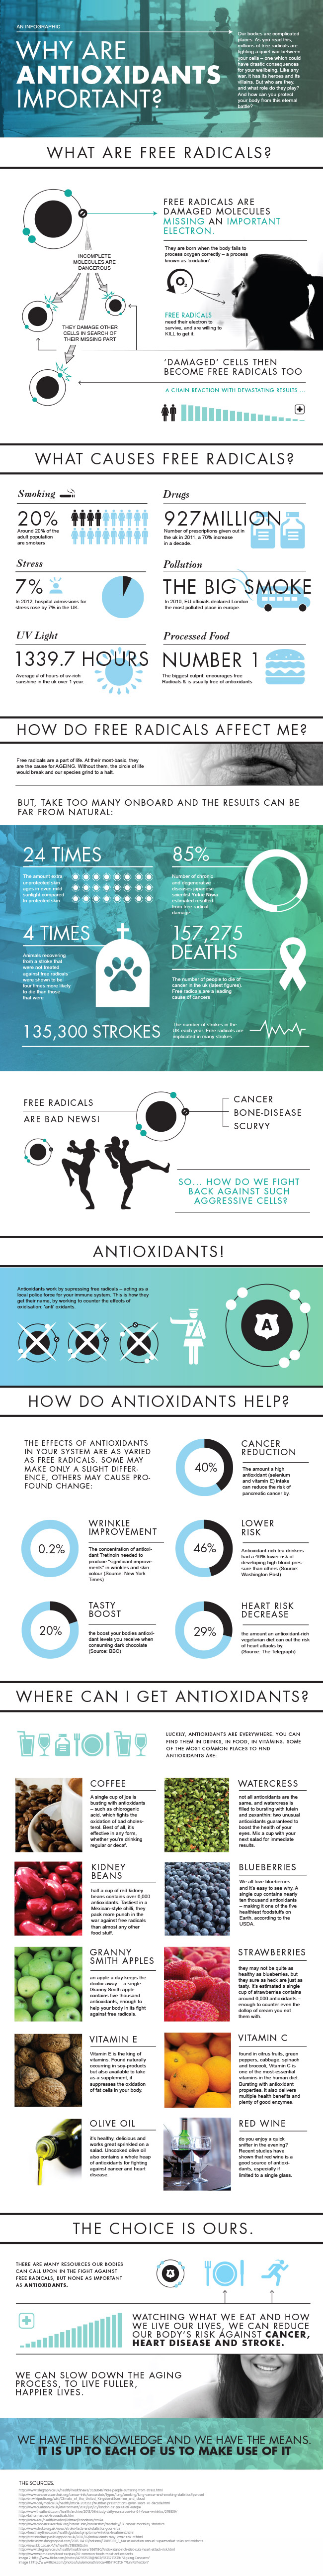 Are Antioxidants Important?